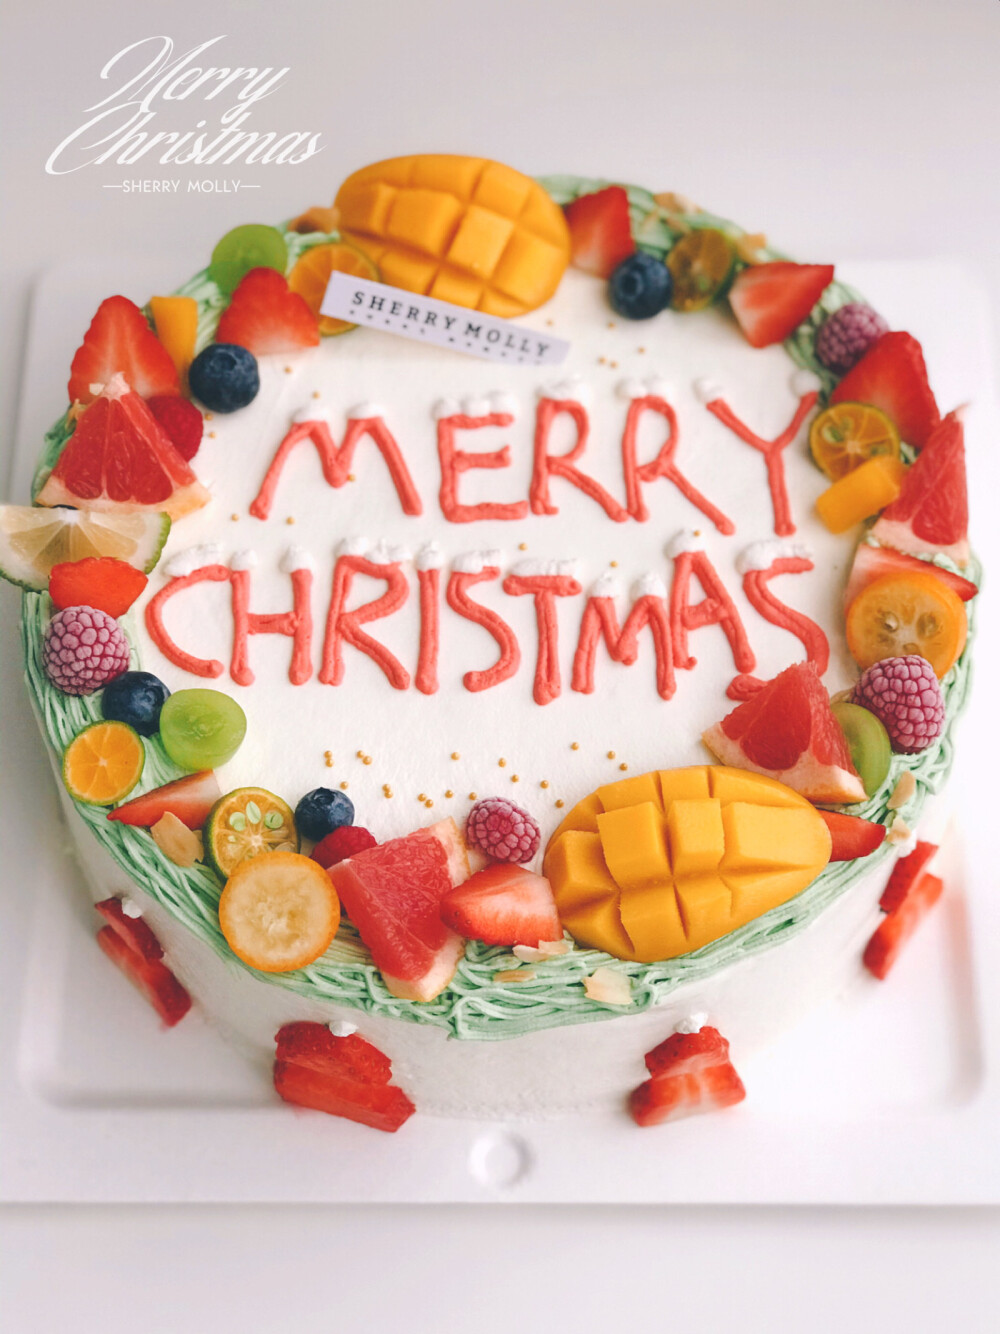 #SHERRY Molly家の下午茶#—『红丝绒大cake』老客人给公司订的圣诞分享cake～第三款做了圣诞水果花环样子呀开心耶